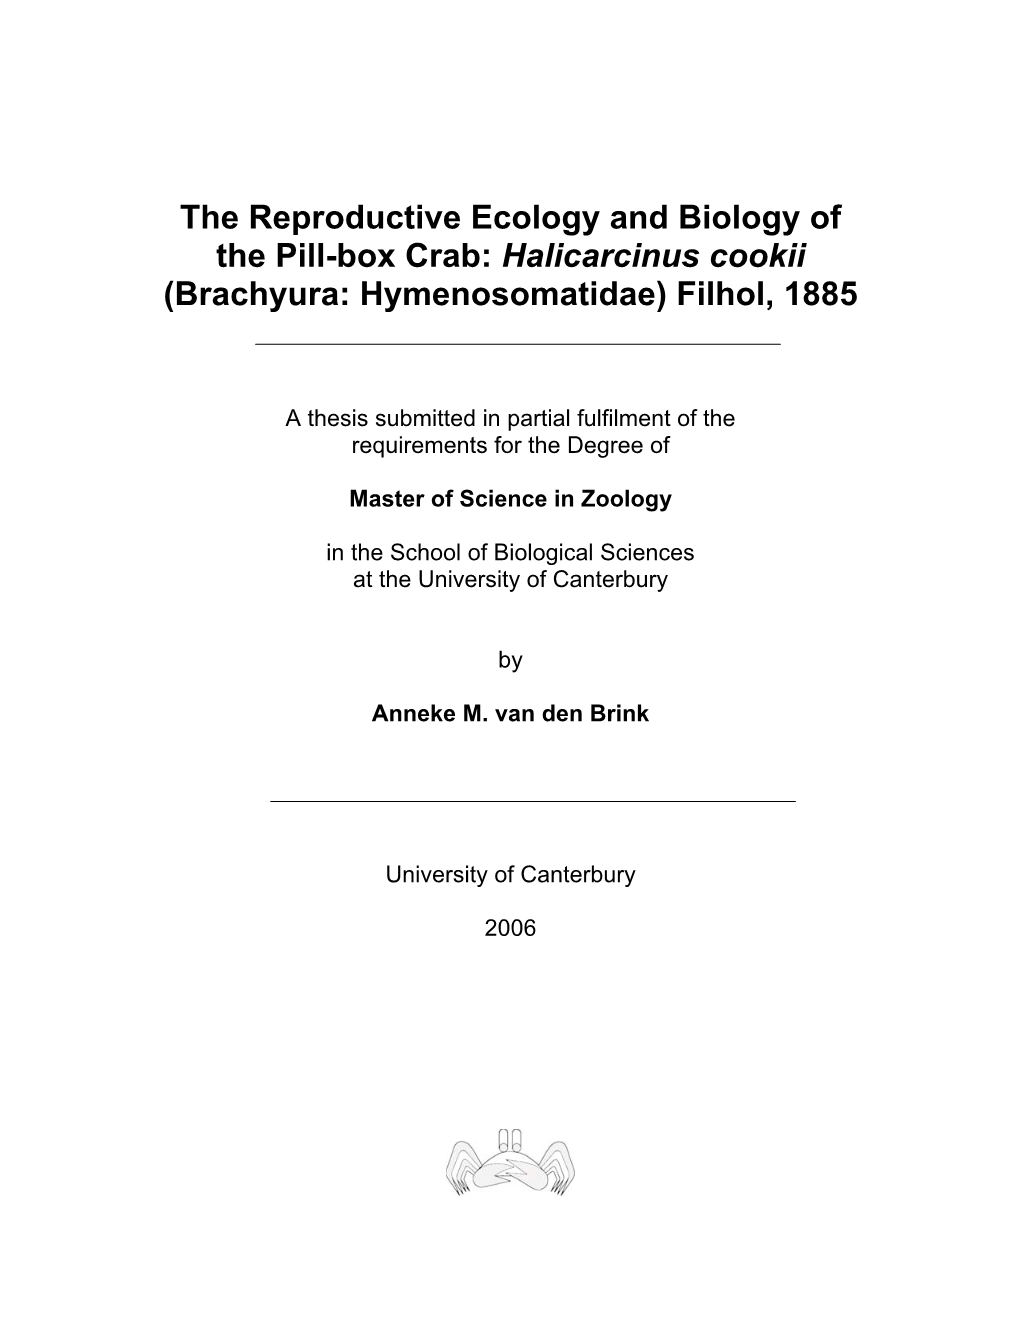 The Reproductive Ecology and Biology of the Pill-Box Crab: Halicarcinus Cookii (Brachyura: Hymenosomatidae) Filhol, 1885